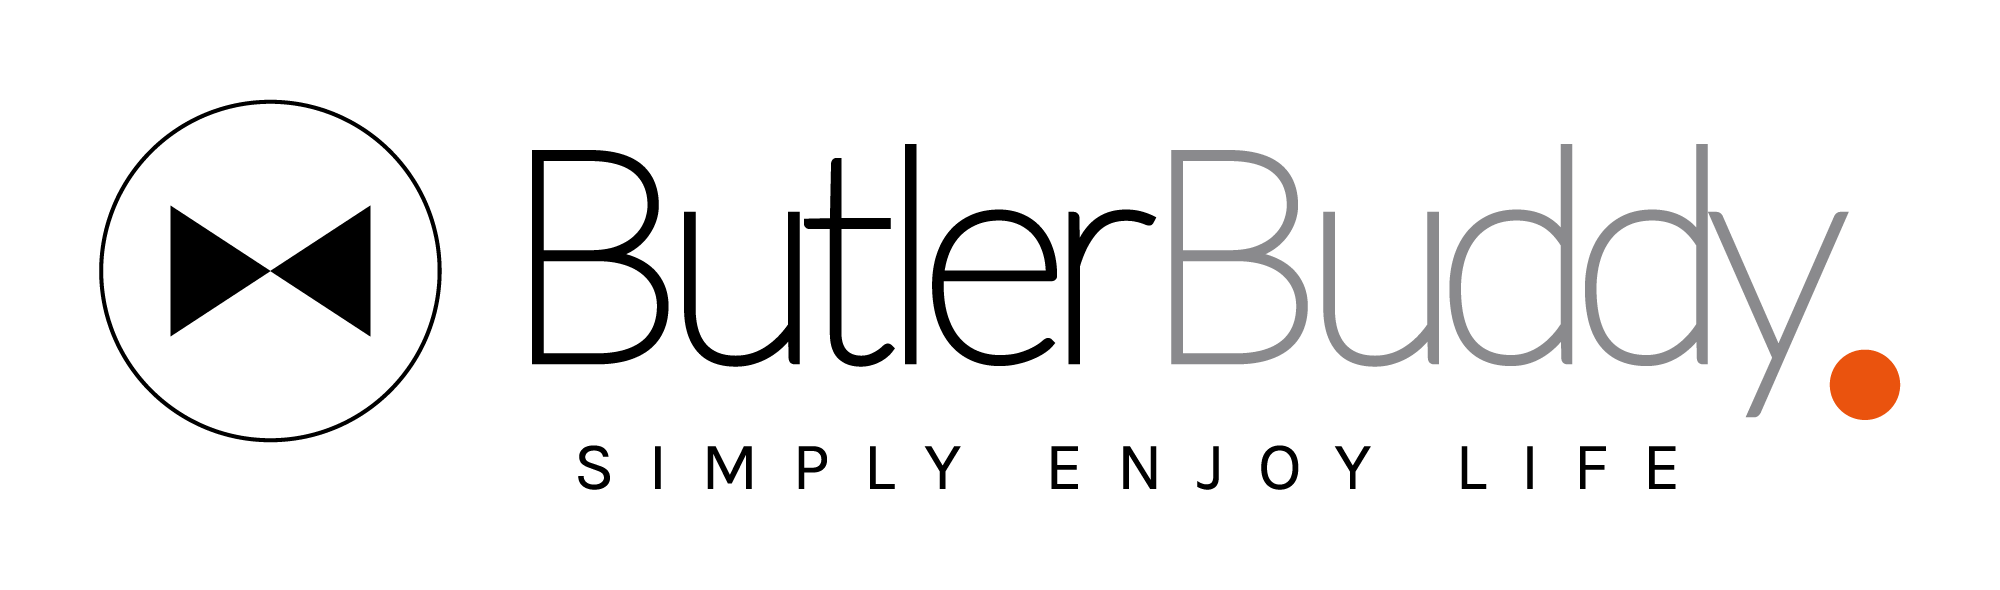 Logo-ButlerBuddy-PMS.png